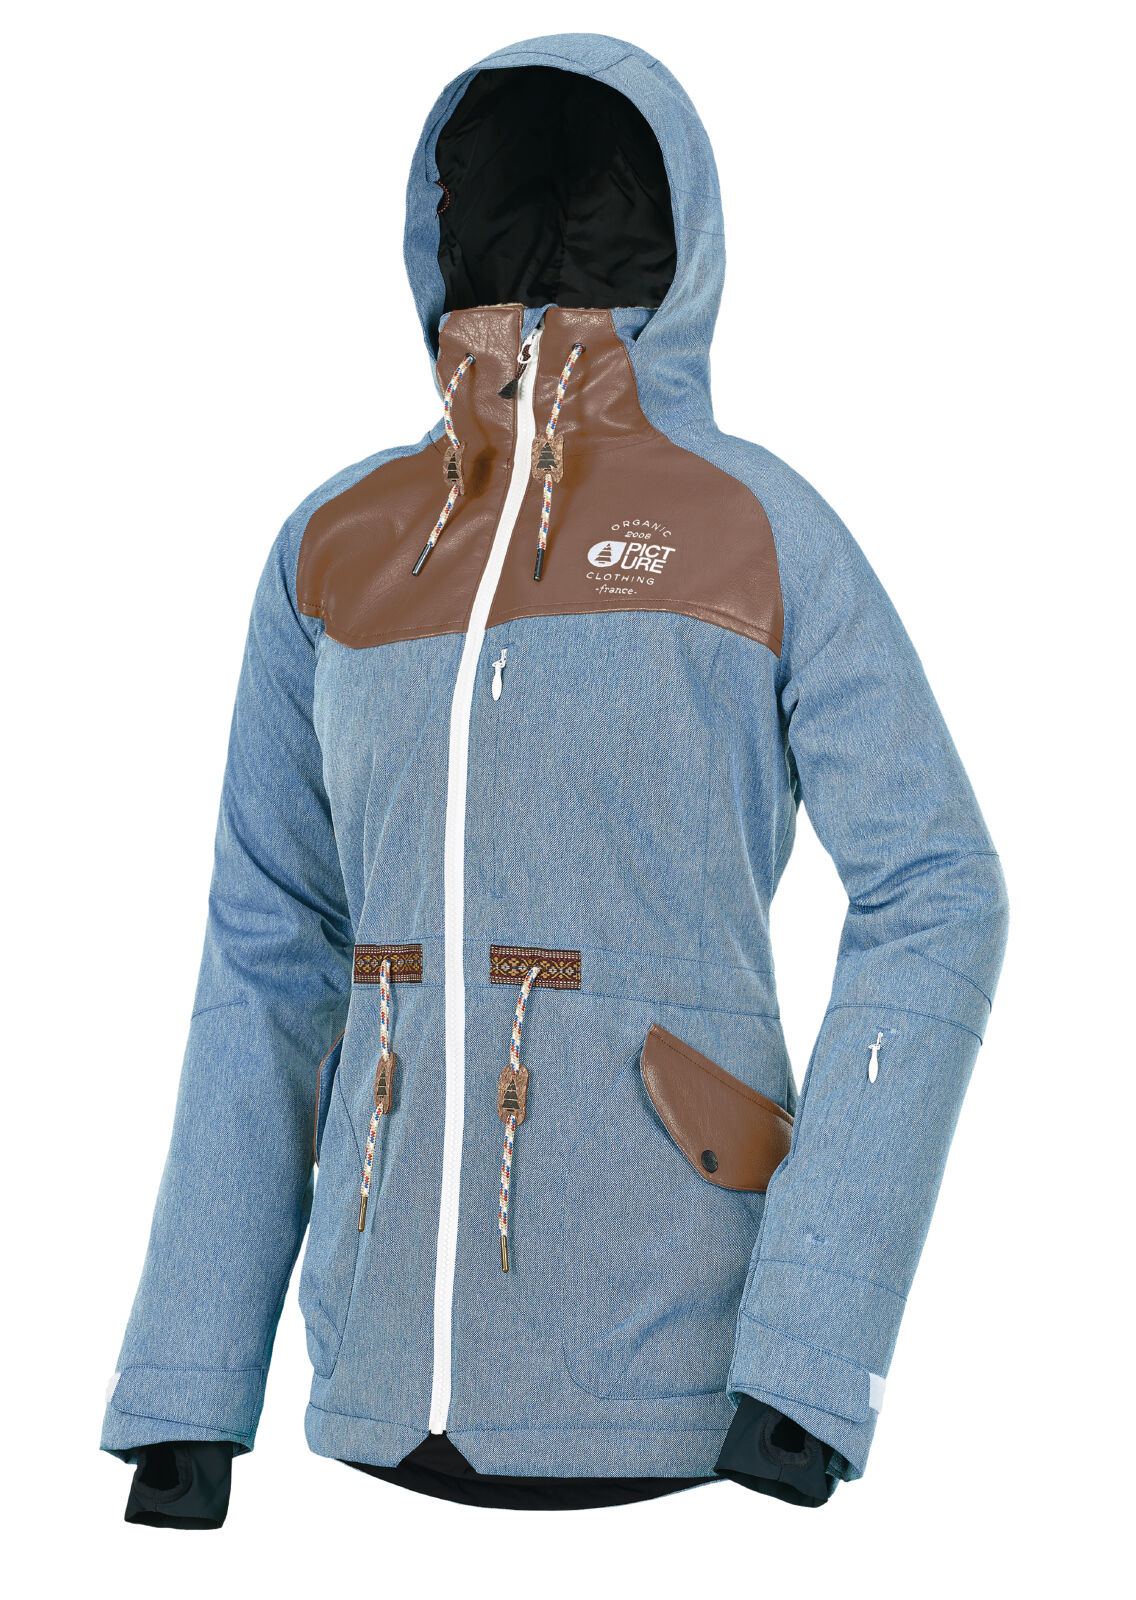 Picture Organic Clothing - Apply - Ski jacket - Women's